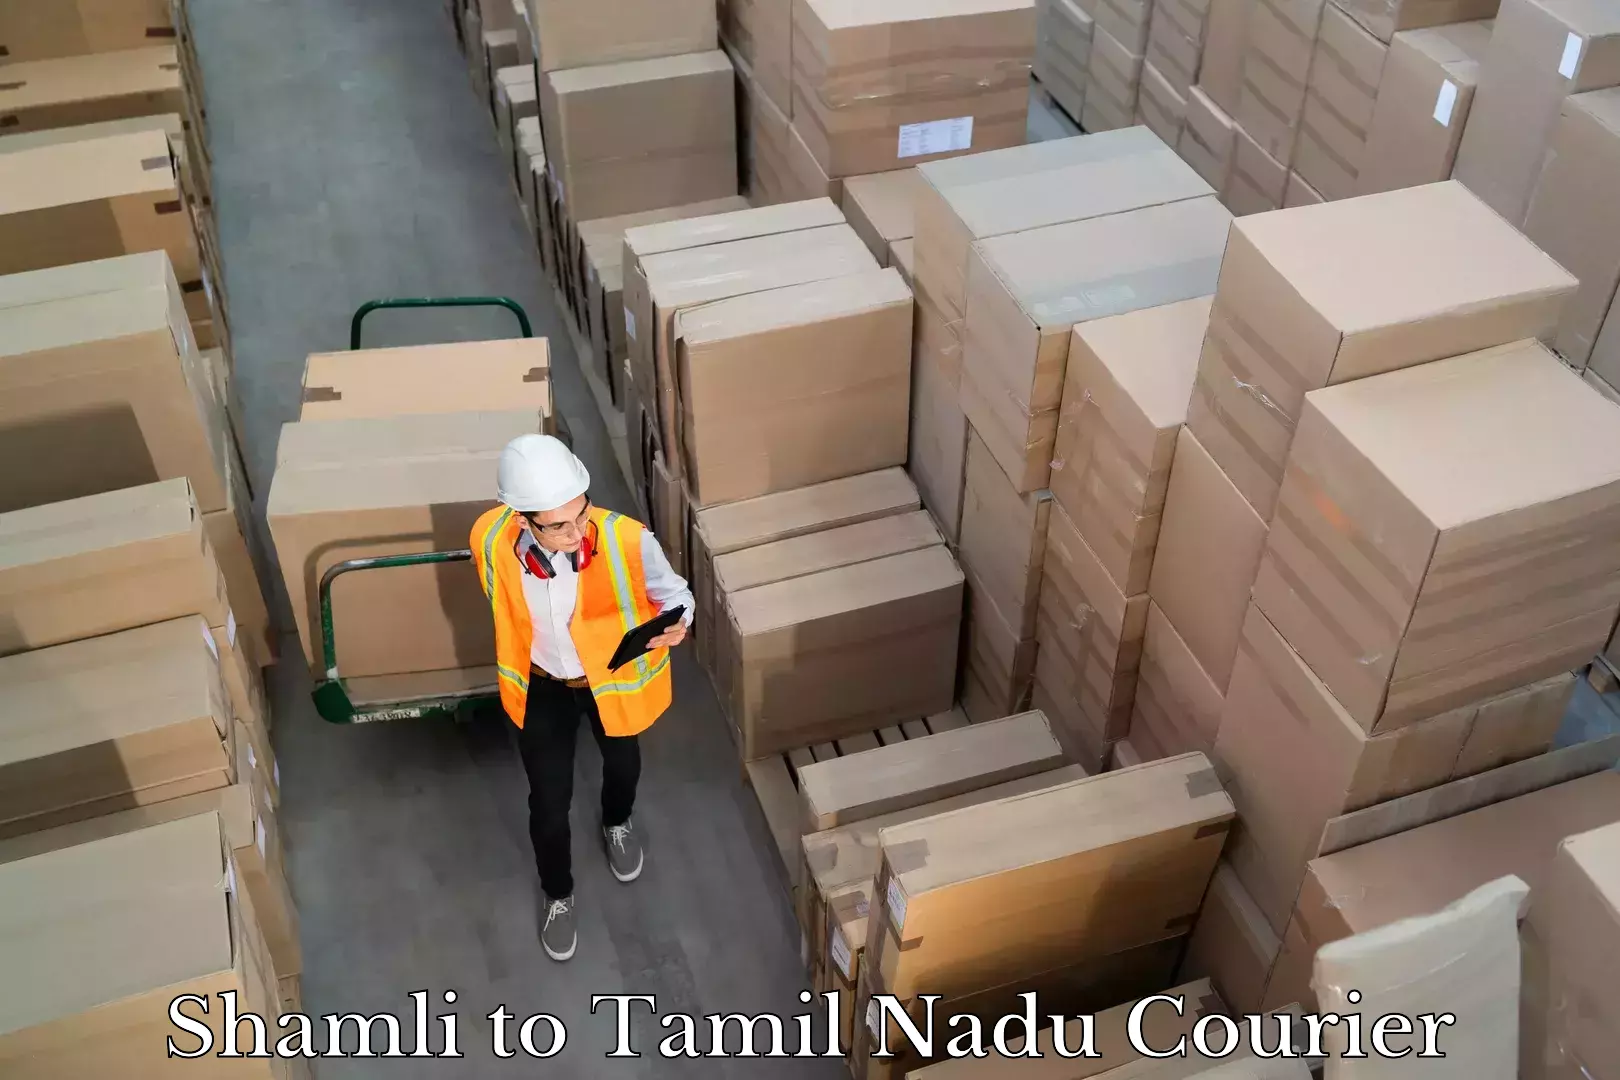 Cash on delivery service Shamli to Tamil Nadu